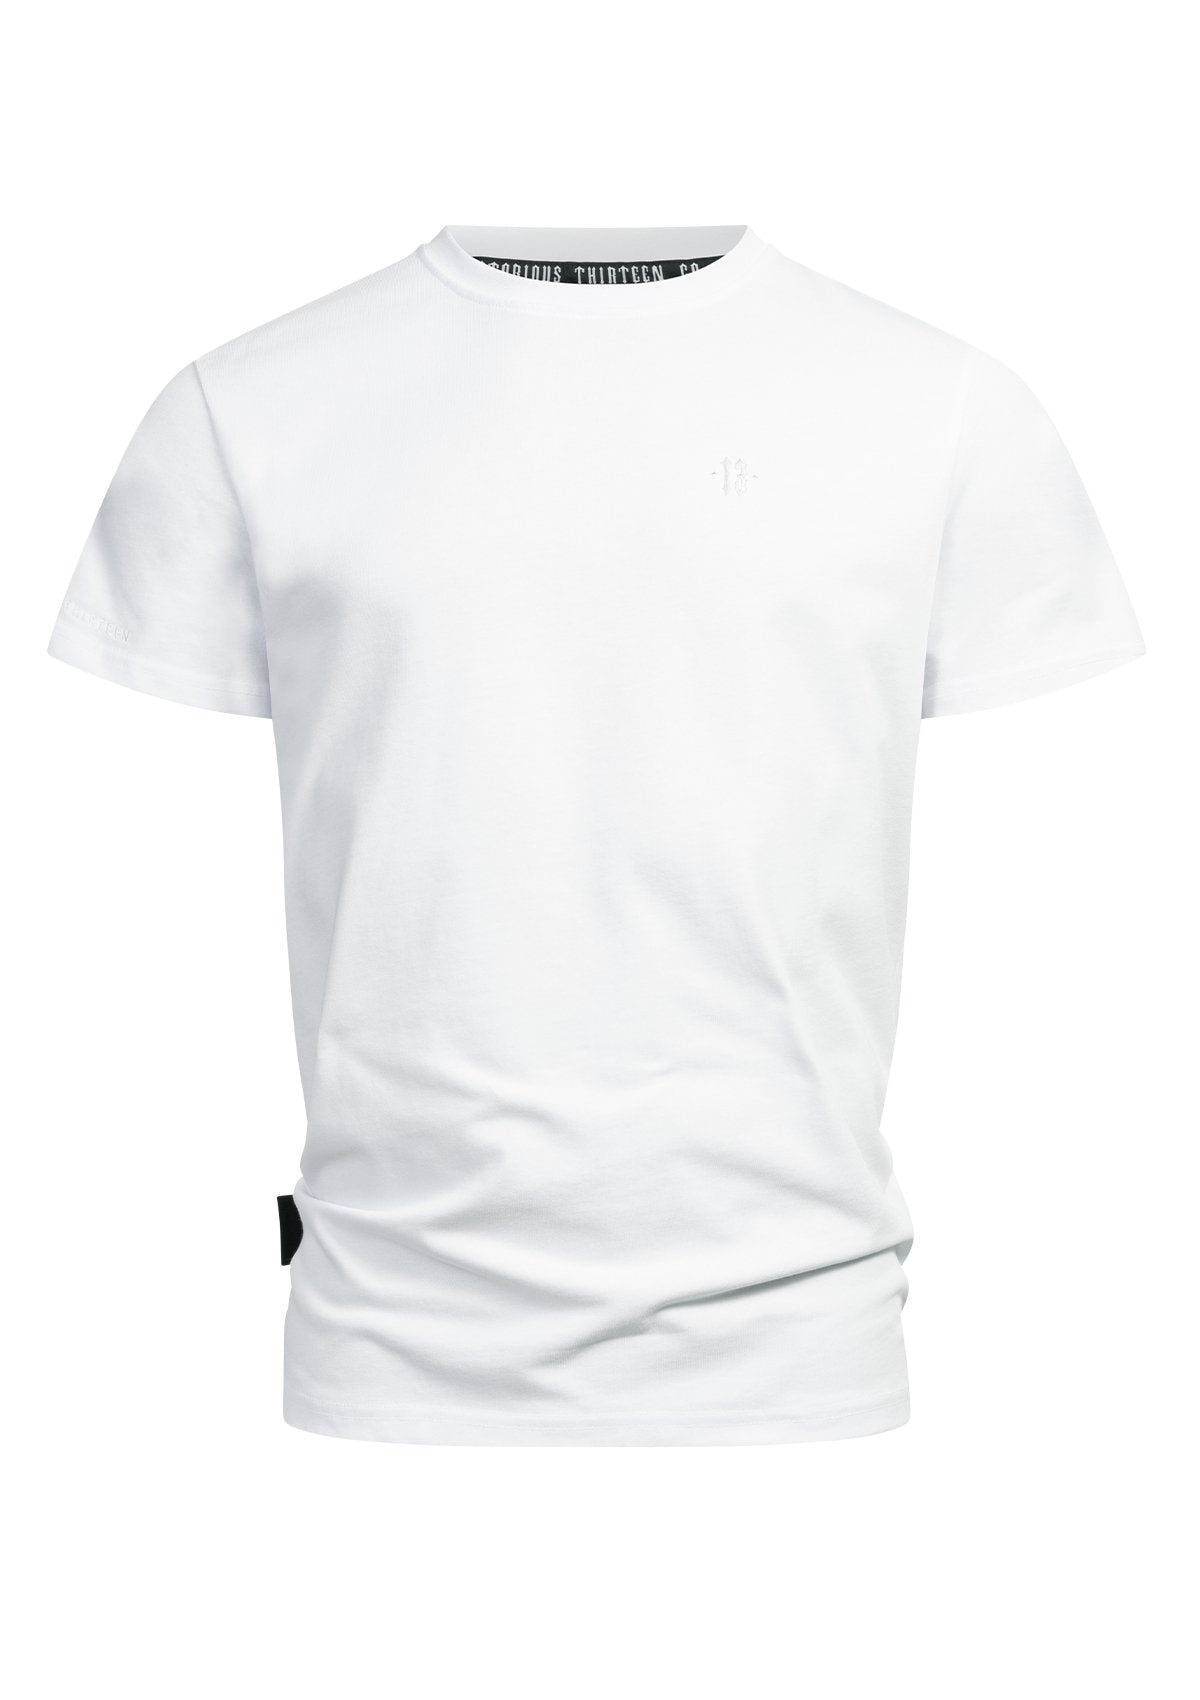 T-Shirt Heavy Original White - MEN OF MAYHEM - ALAIKO-EXCHANGES-MM-M-1010-HOG-WH - Men - Neu